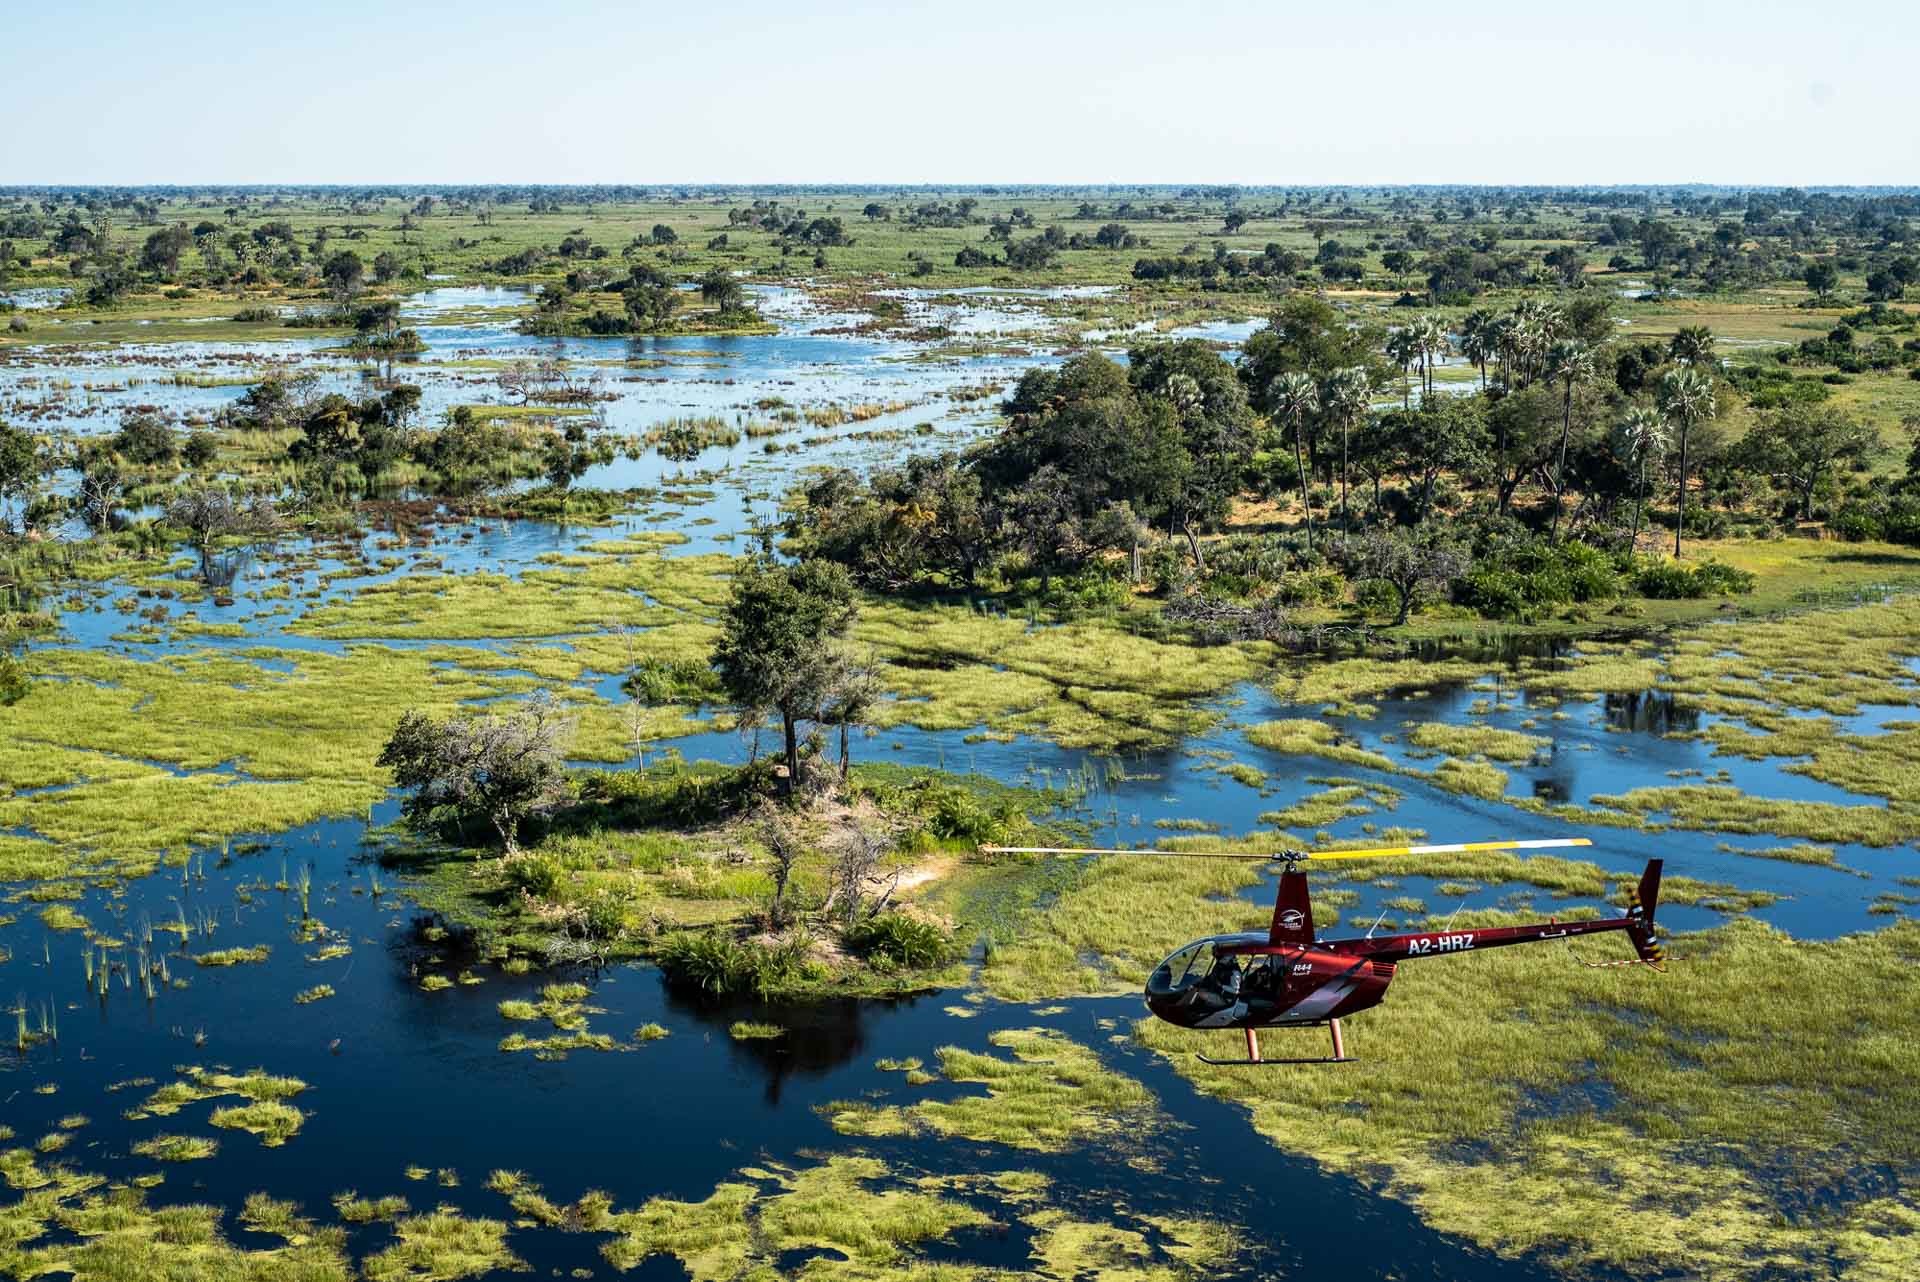 Okavango craft gin experience